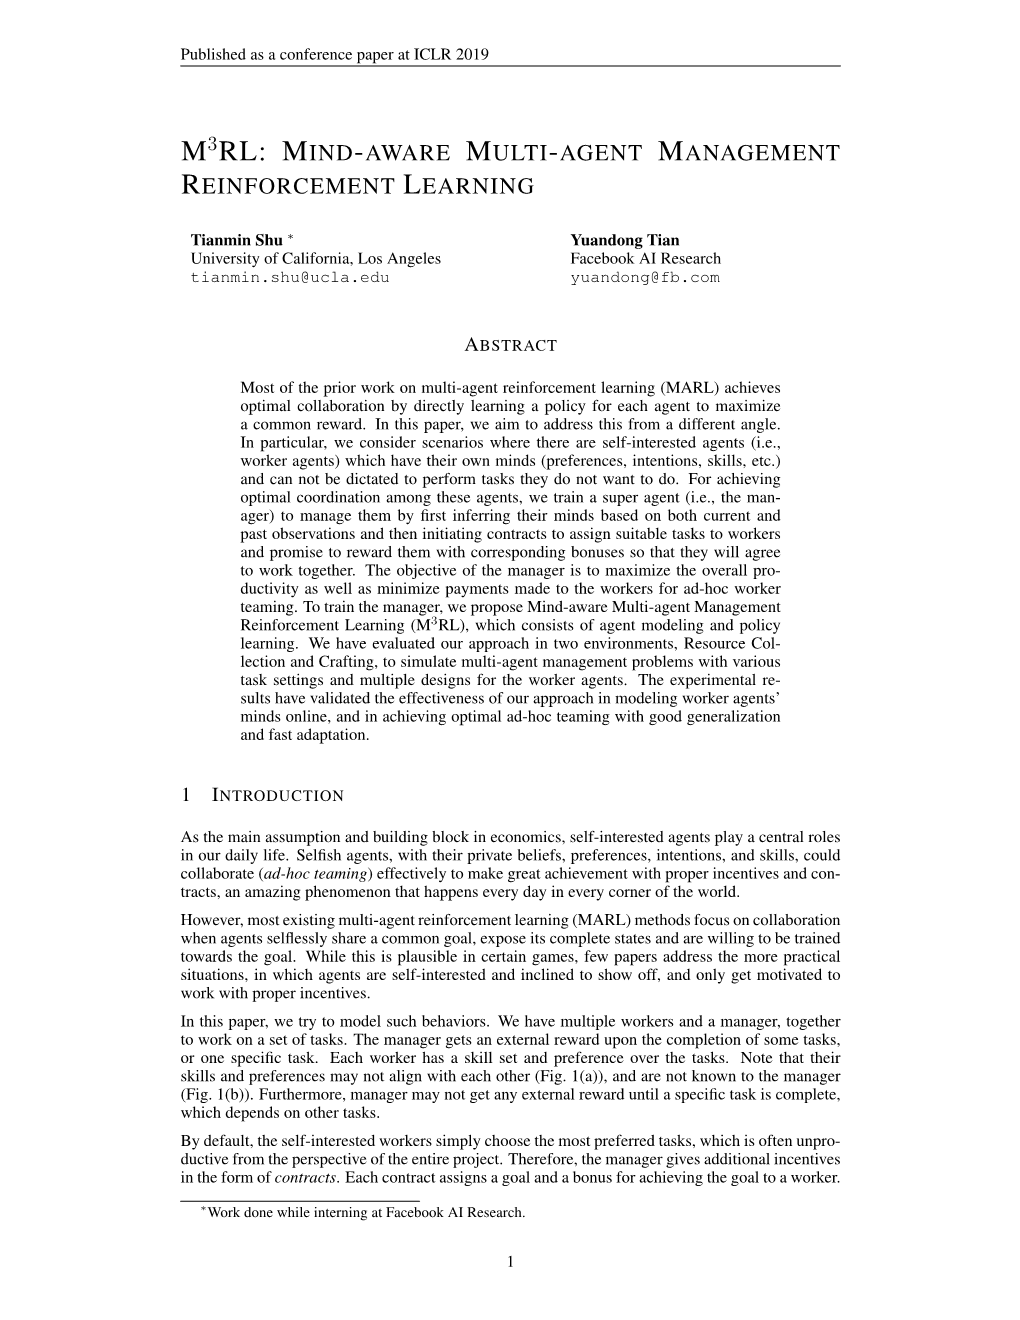 Rl: Mind-Aware Multi-Agent Management Reinforcement Learning